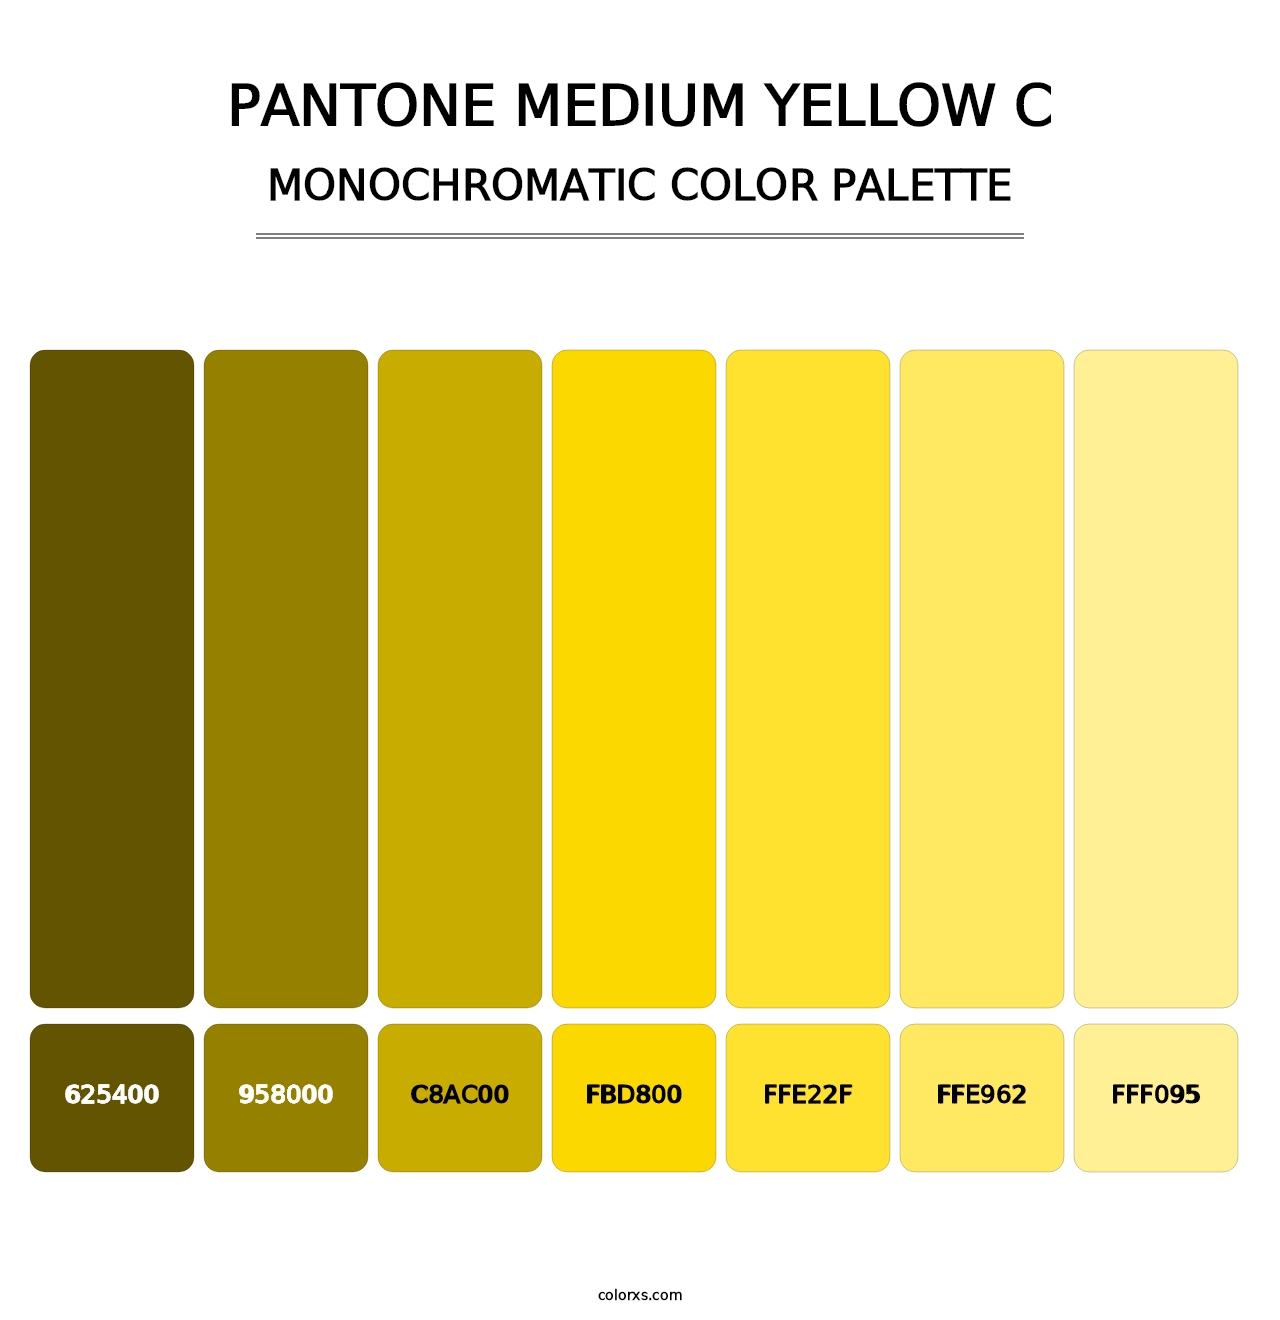 PANTONE Medium Yellow C - Monochromatic Color Palette